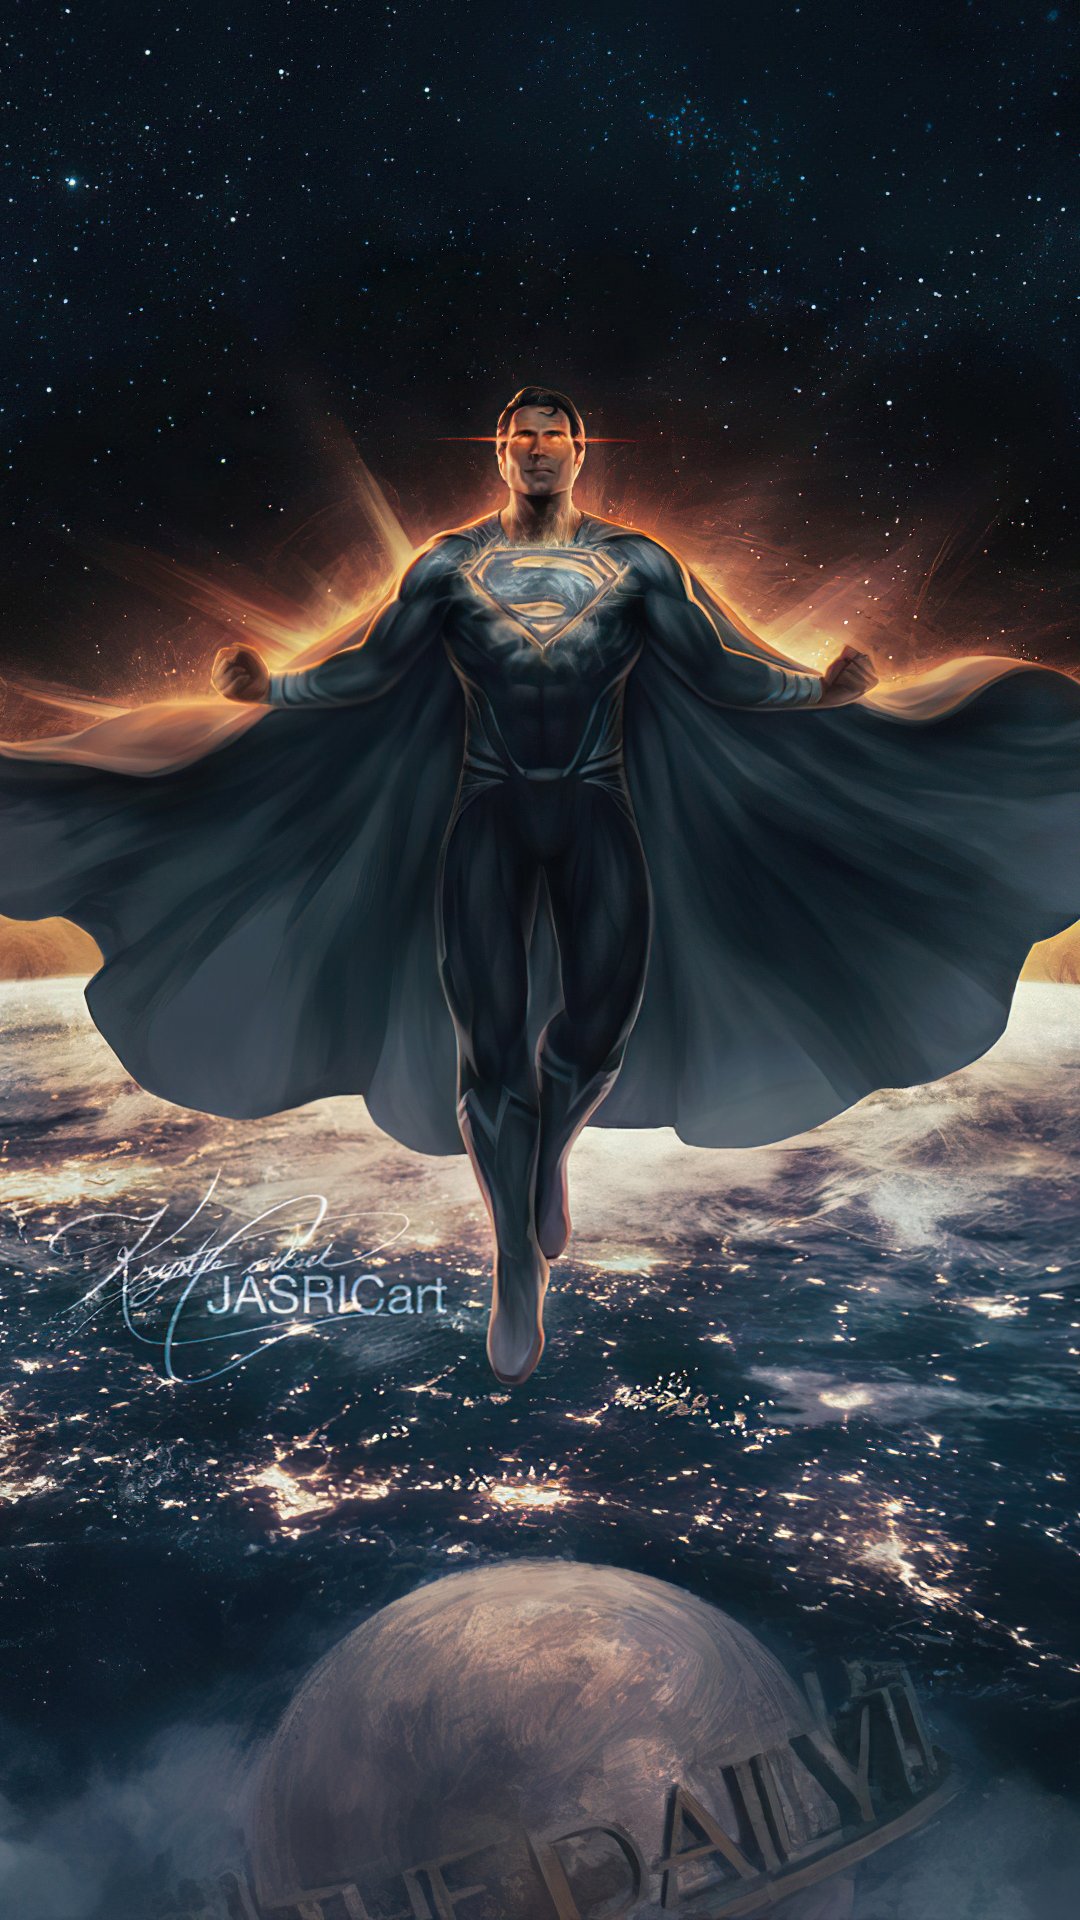 Superman black suit Justice League Zack Snyder Wallpaper 4k Ultra HD ID:7556